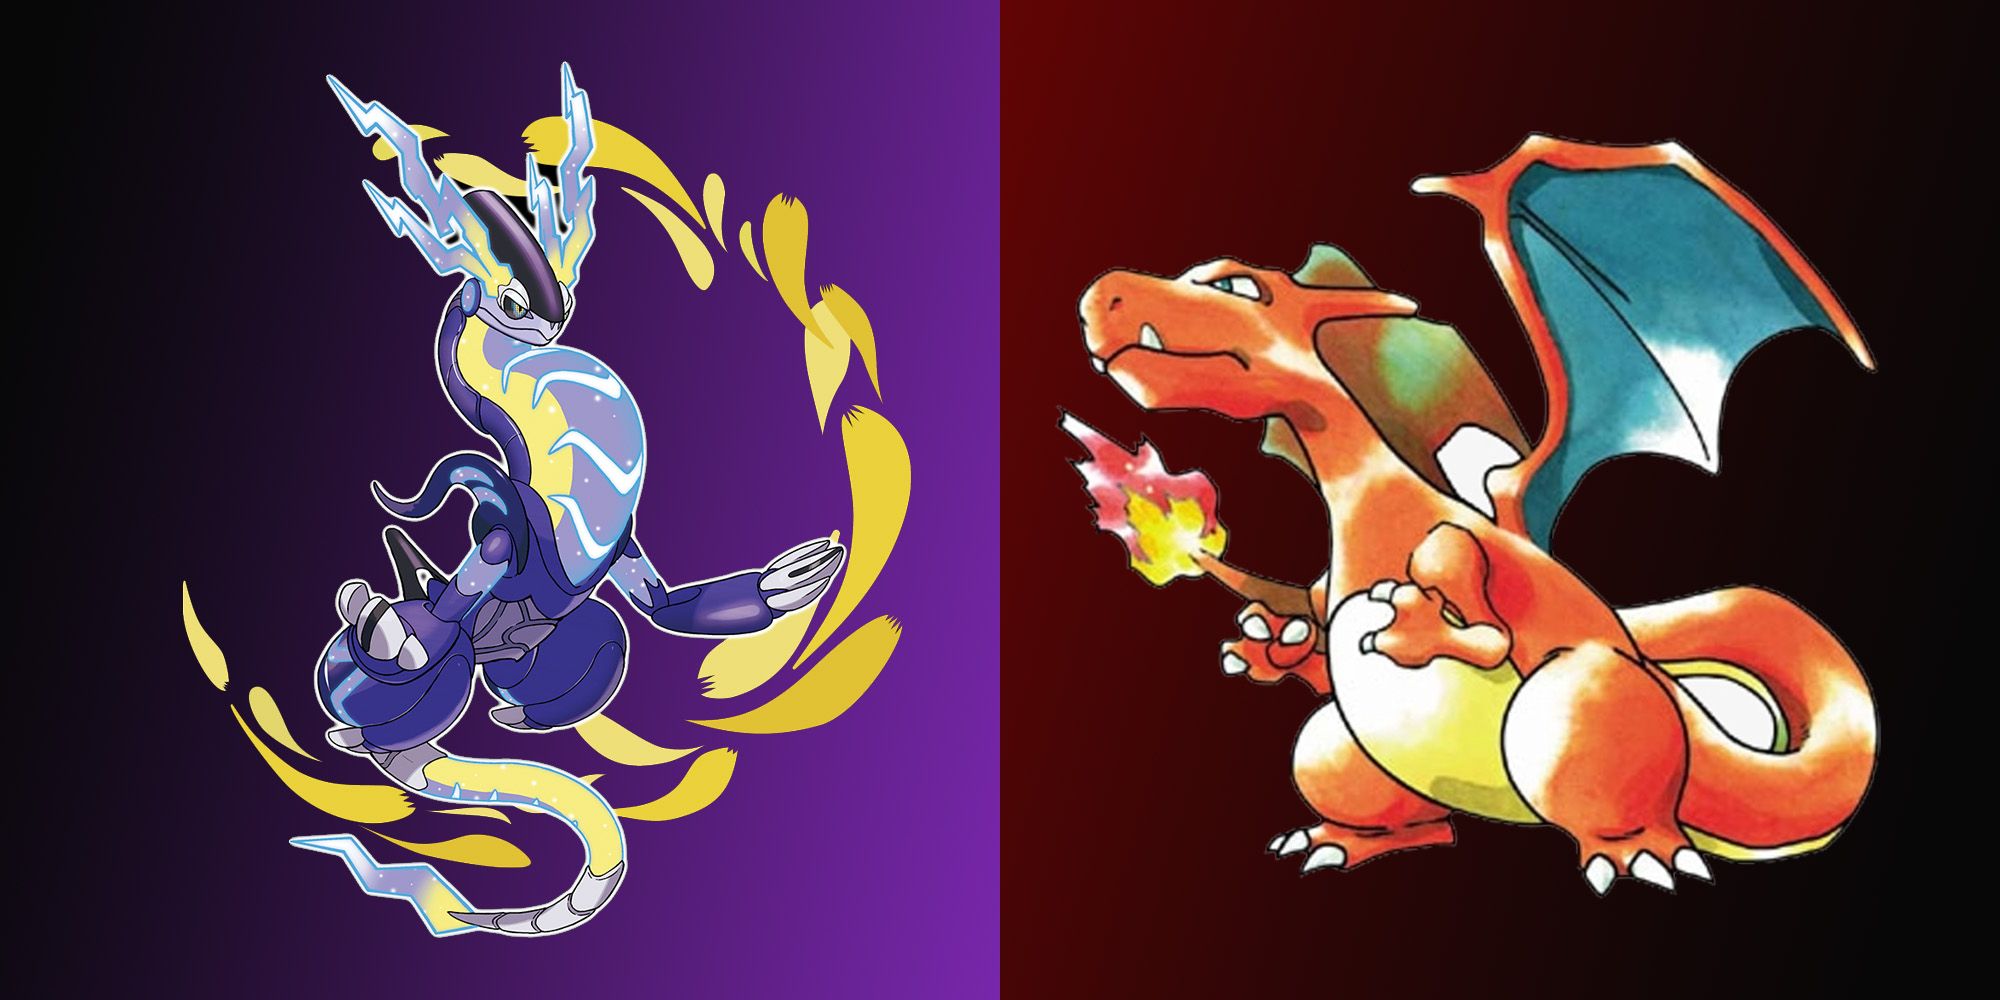 Pokemon Violet Legendary Miraidon on the left on a purple background; Pokemon Red evolved starter Charizard on the right on a red background.